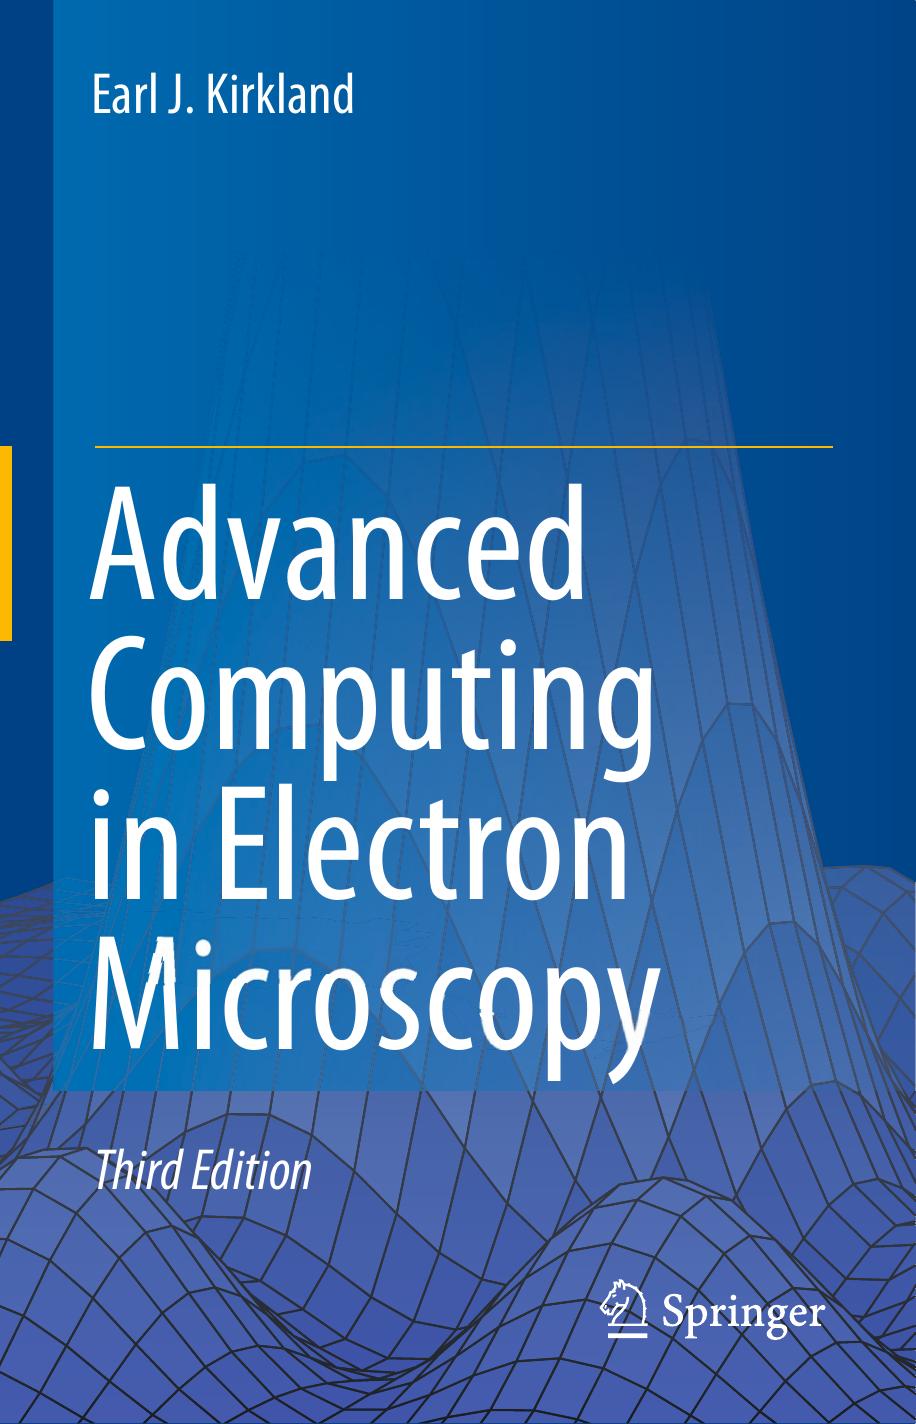 Advanced Computing in Electron Microscopy by Earl J. Kirkland